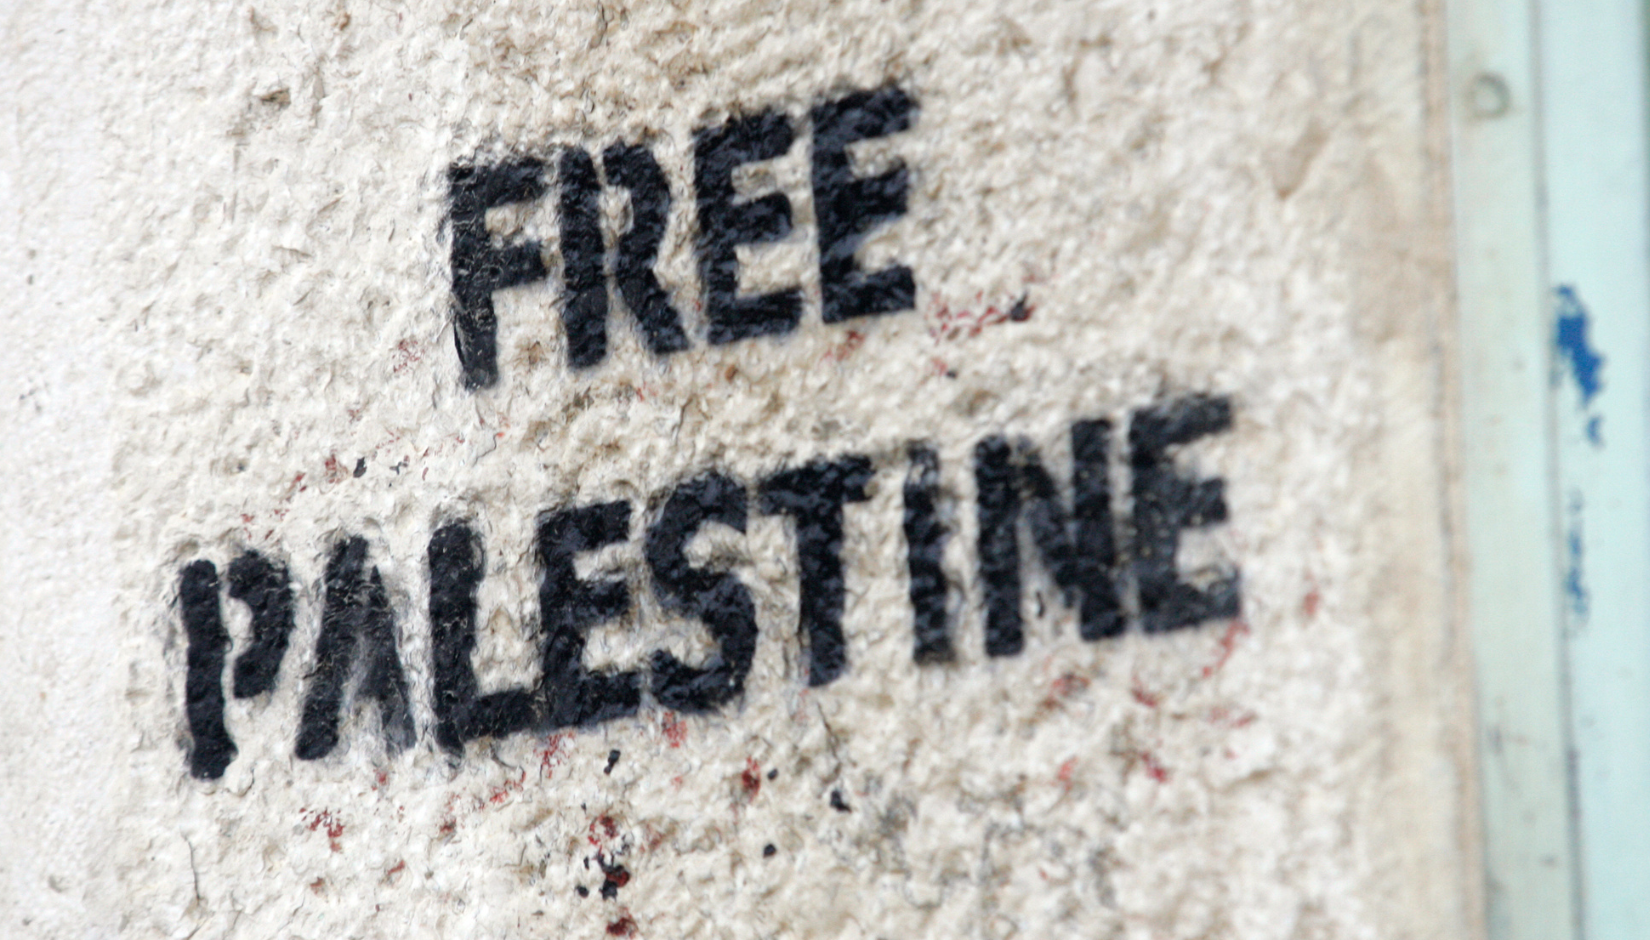 freee palestine 2023.12sulatesta